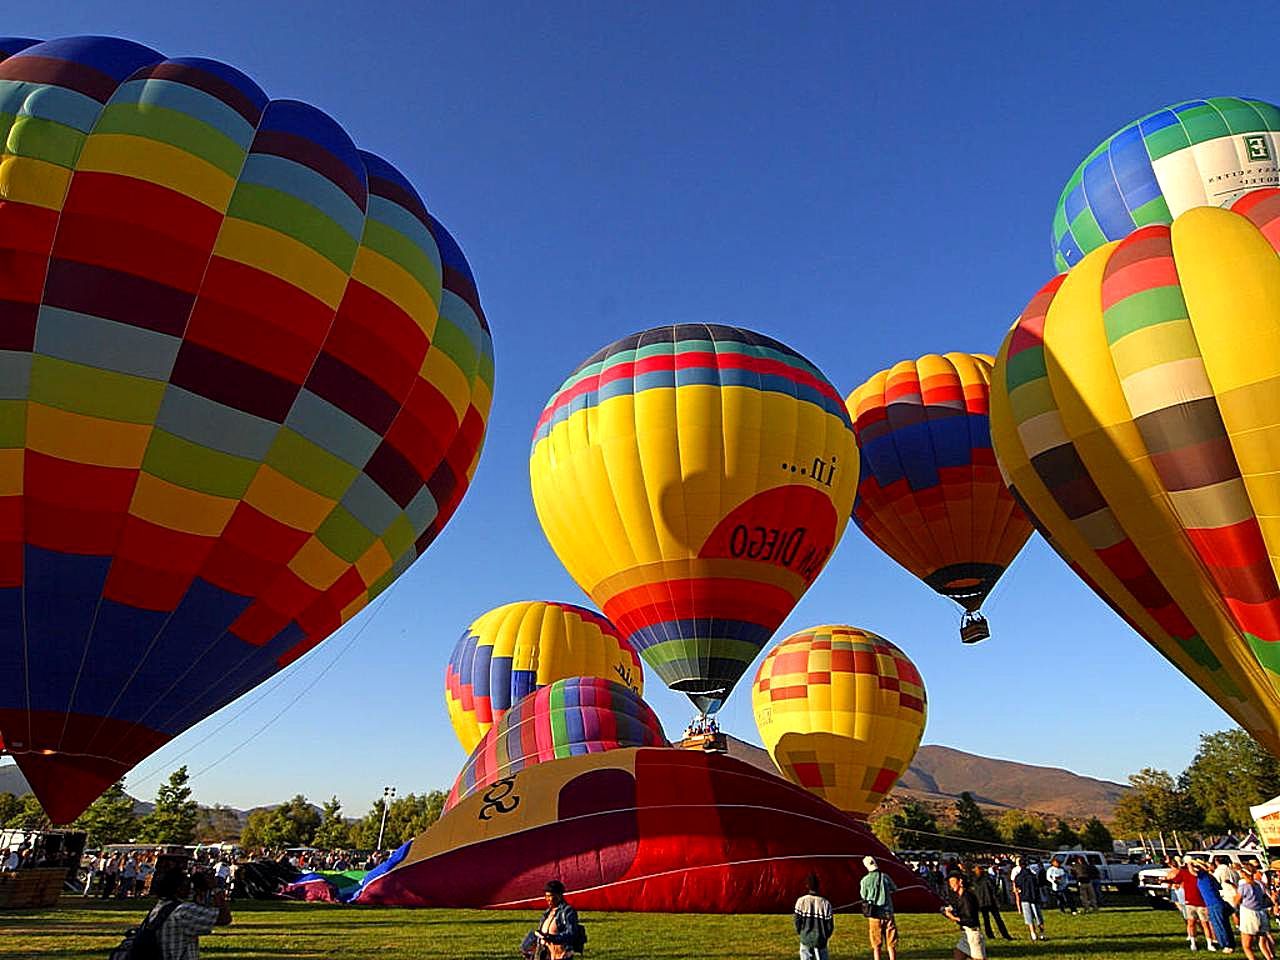 https://upload.wikimedia.org/wikipedia/commons/9/97/Hot_air_balloons_on_ground.jpg